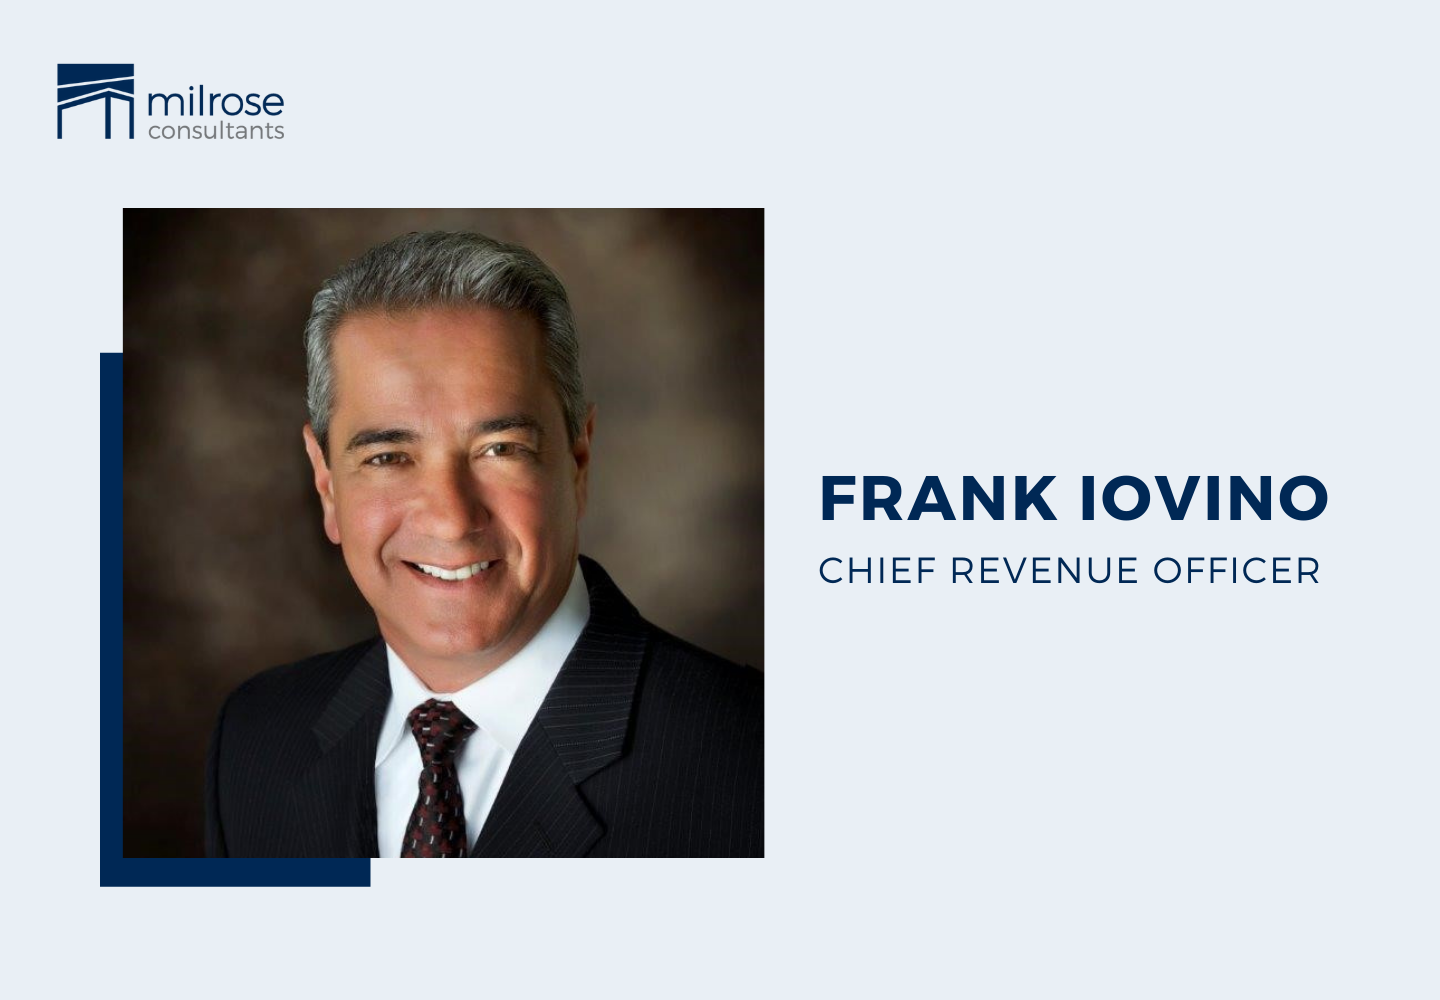 Milrose Consultants Announces Frank Iovino as Chief Revenue Officer